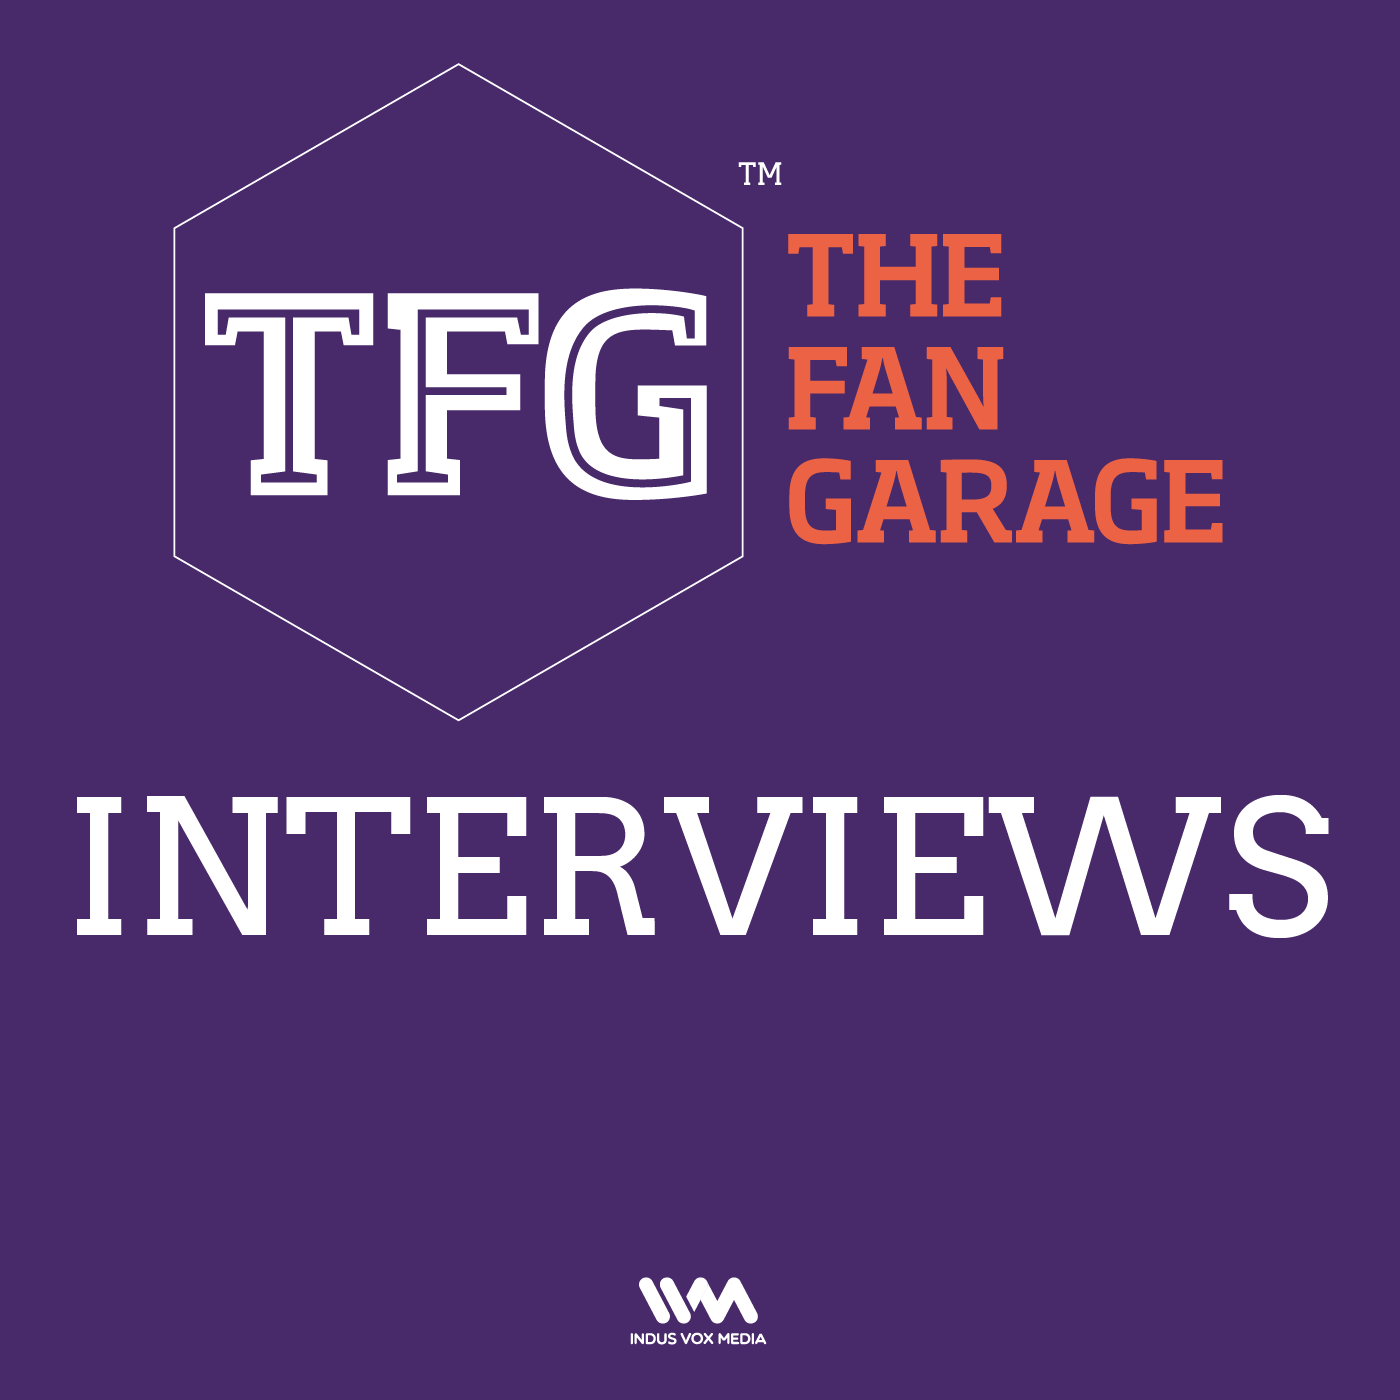 TFG interviews Ep. 001: Dan Ignat Interview